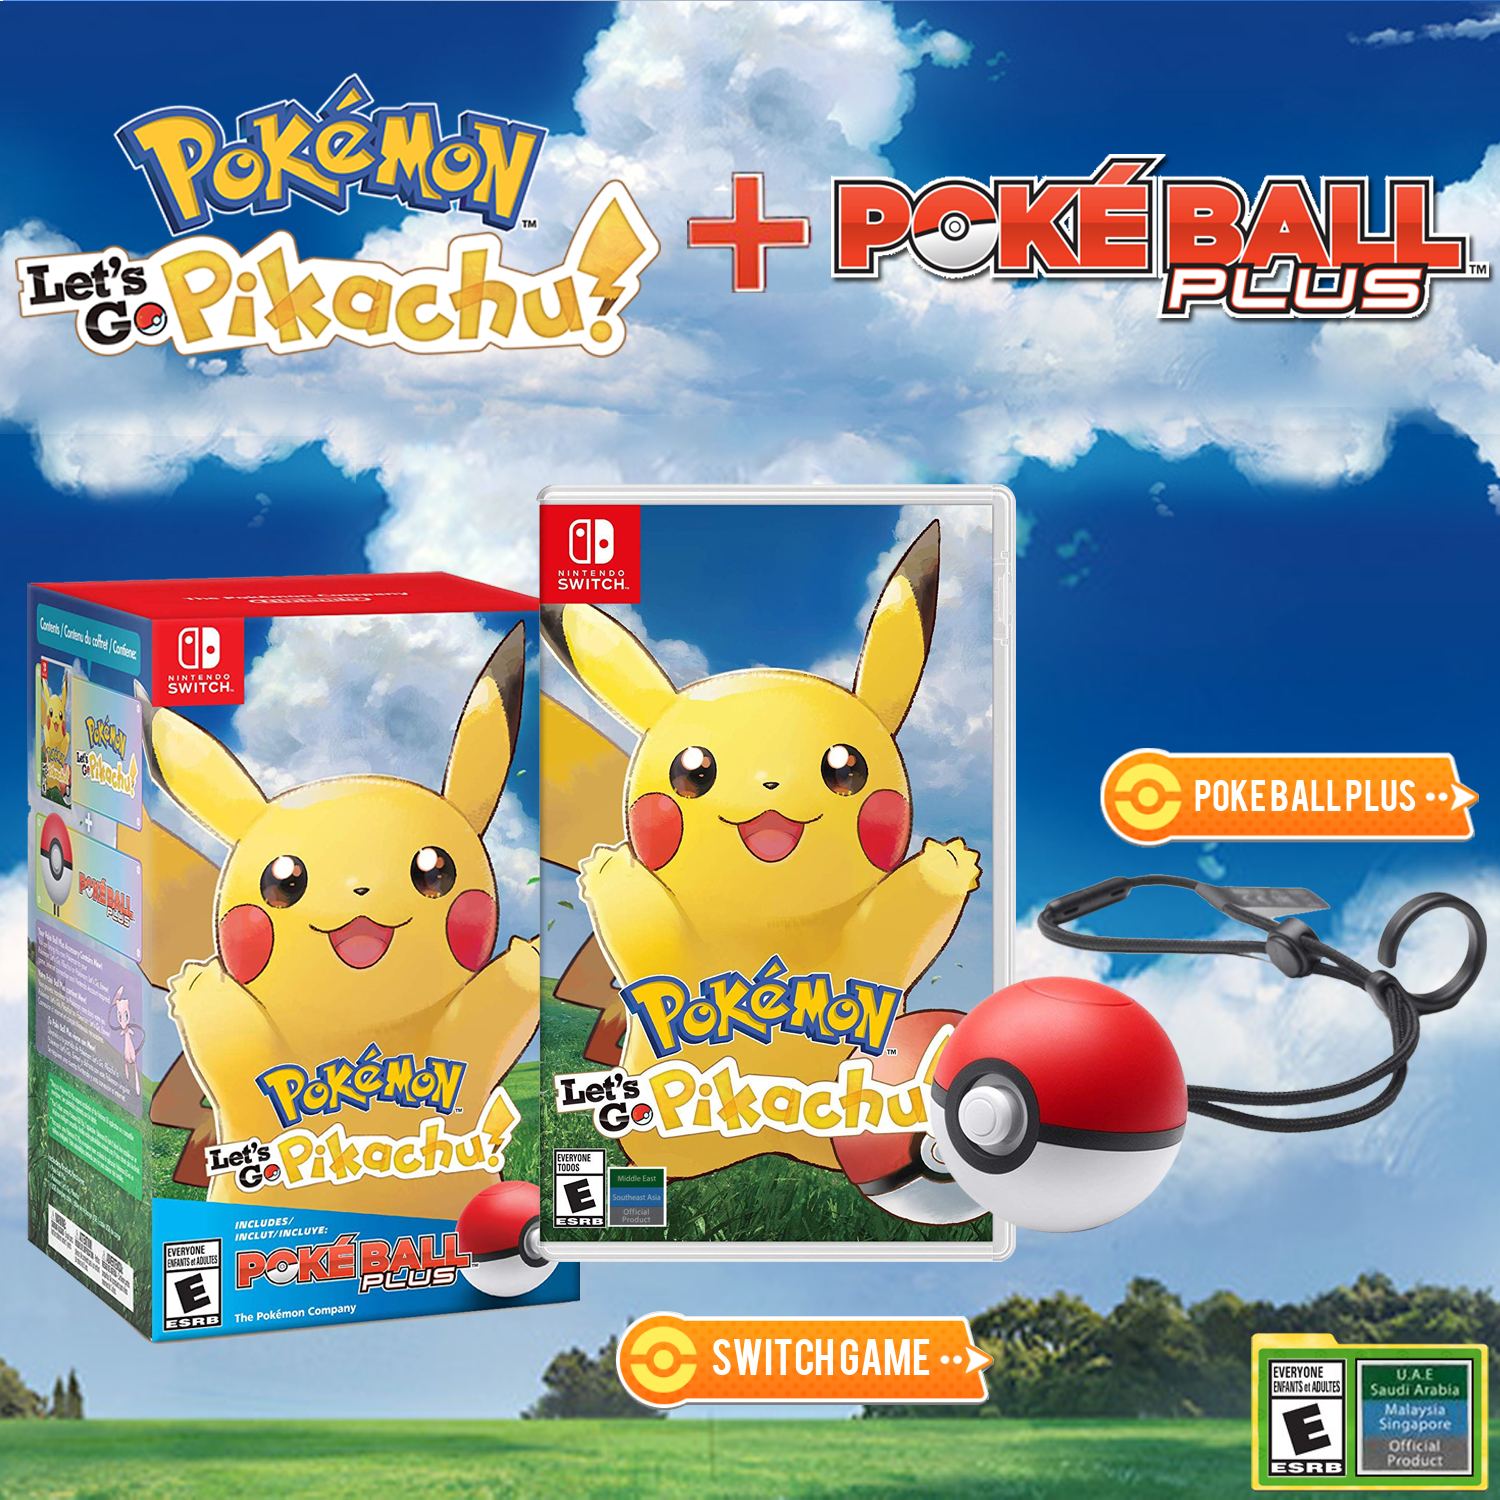 Pokemon Lets Go Pikachu Poke Ball Plus Pack